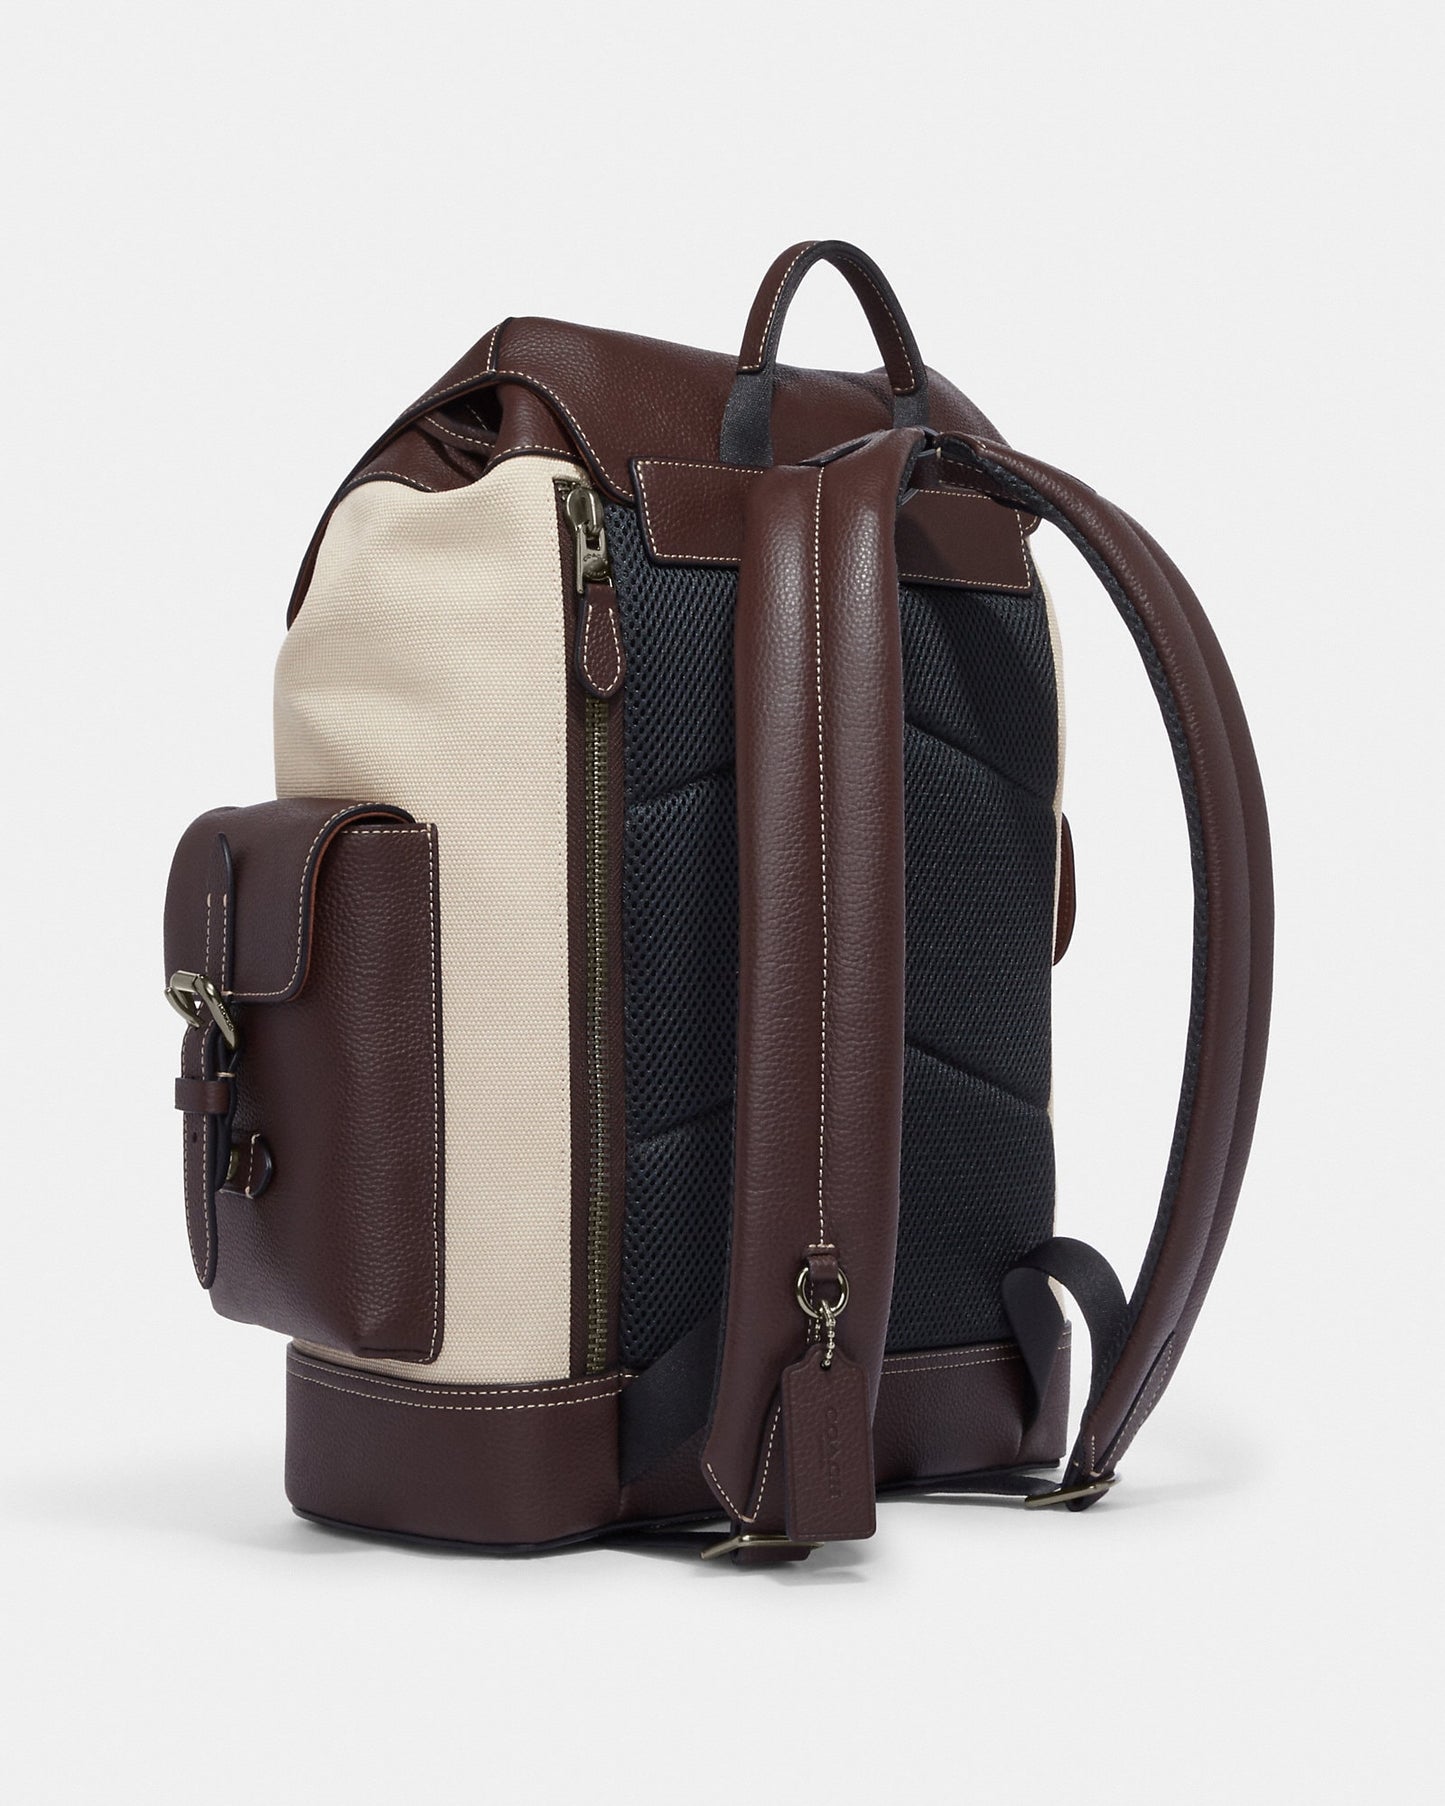 NWT COACH Hudson Backpack Cavas/Leather